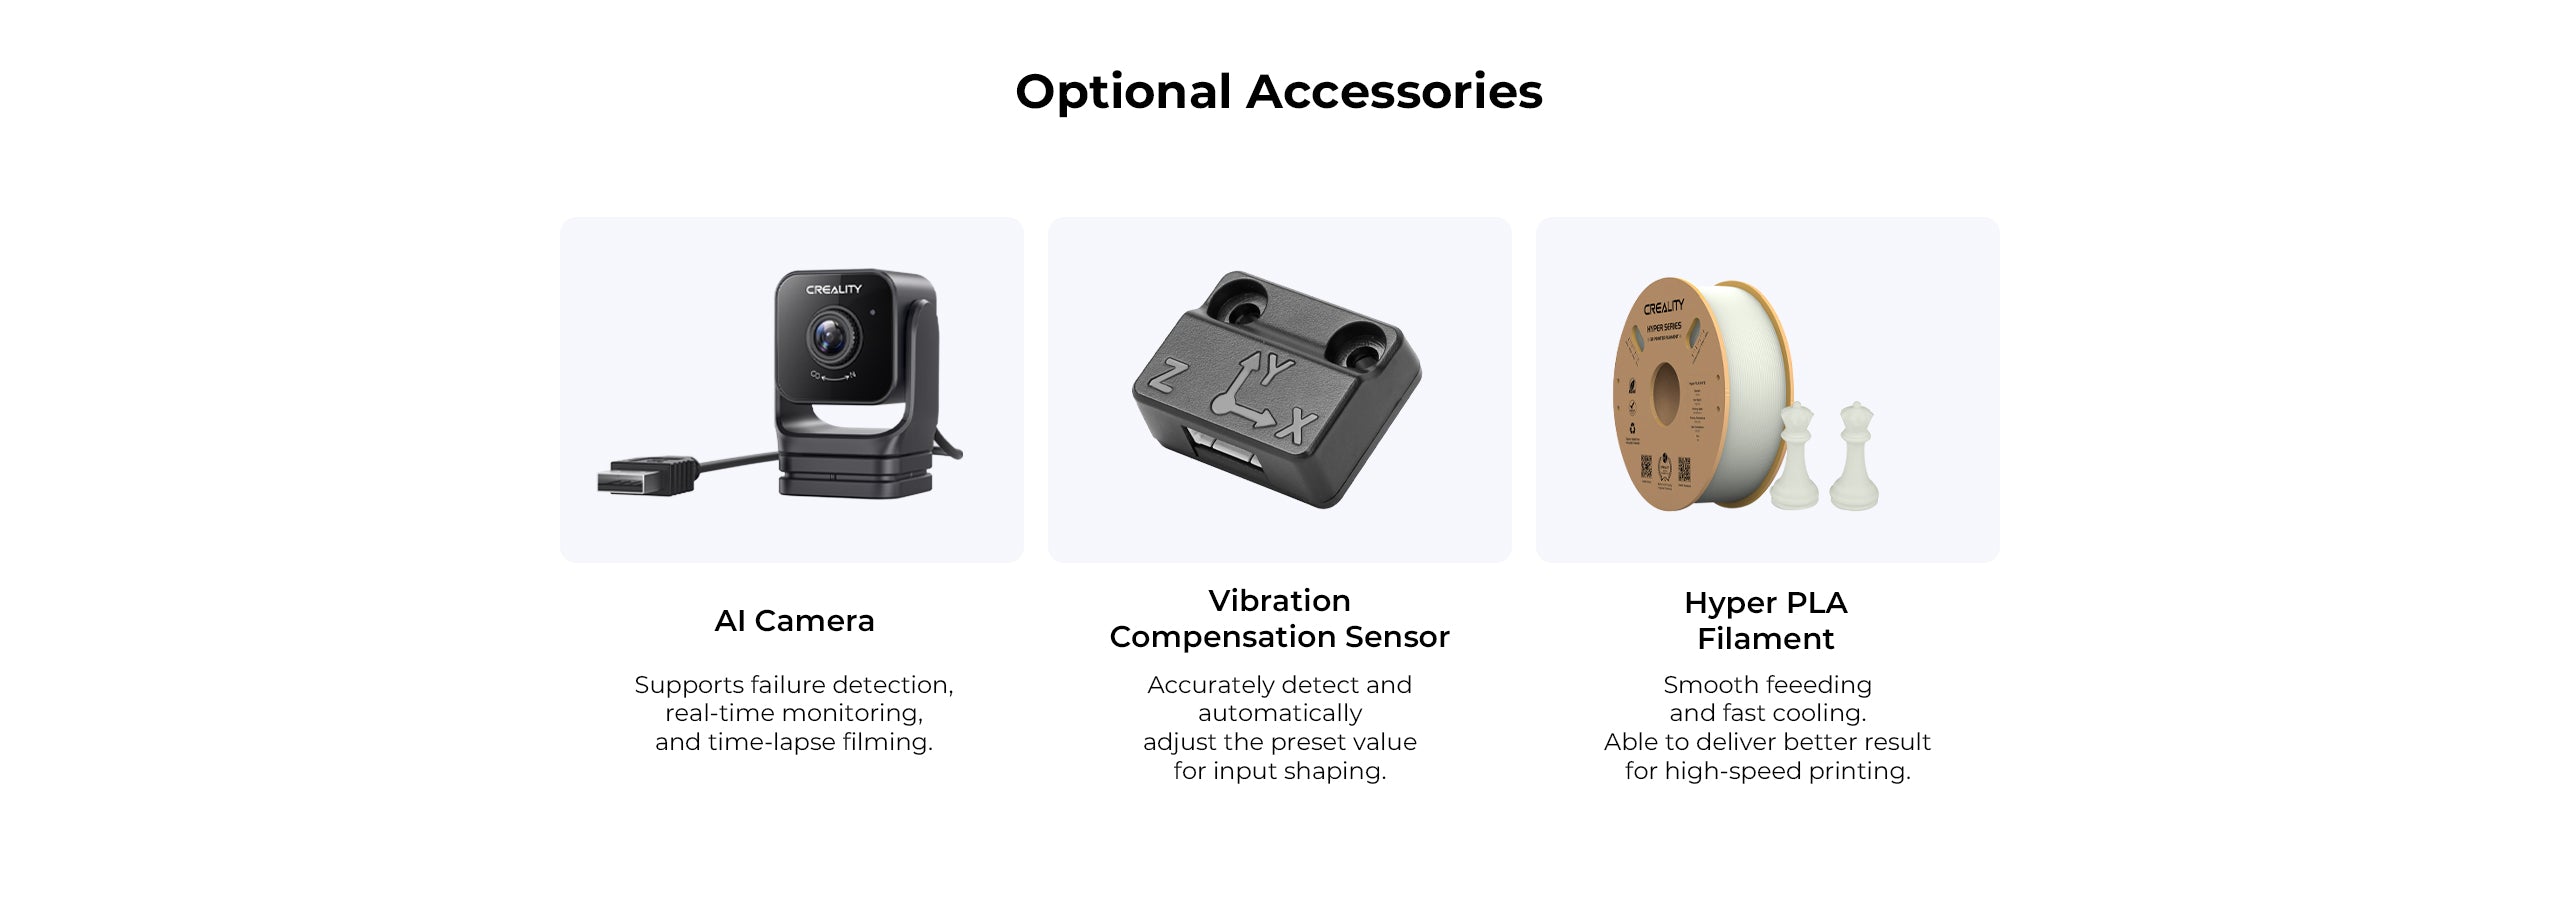 3 optional accessories of ender 3 v3 Ke, ai camera, vibration compensation sensor, hyper pla filament